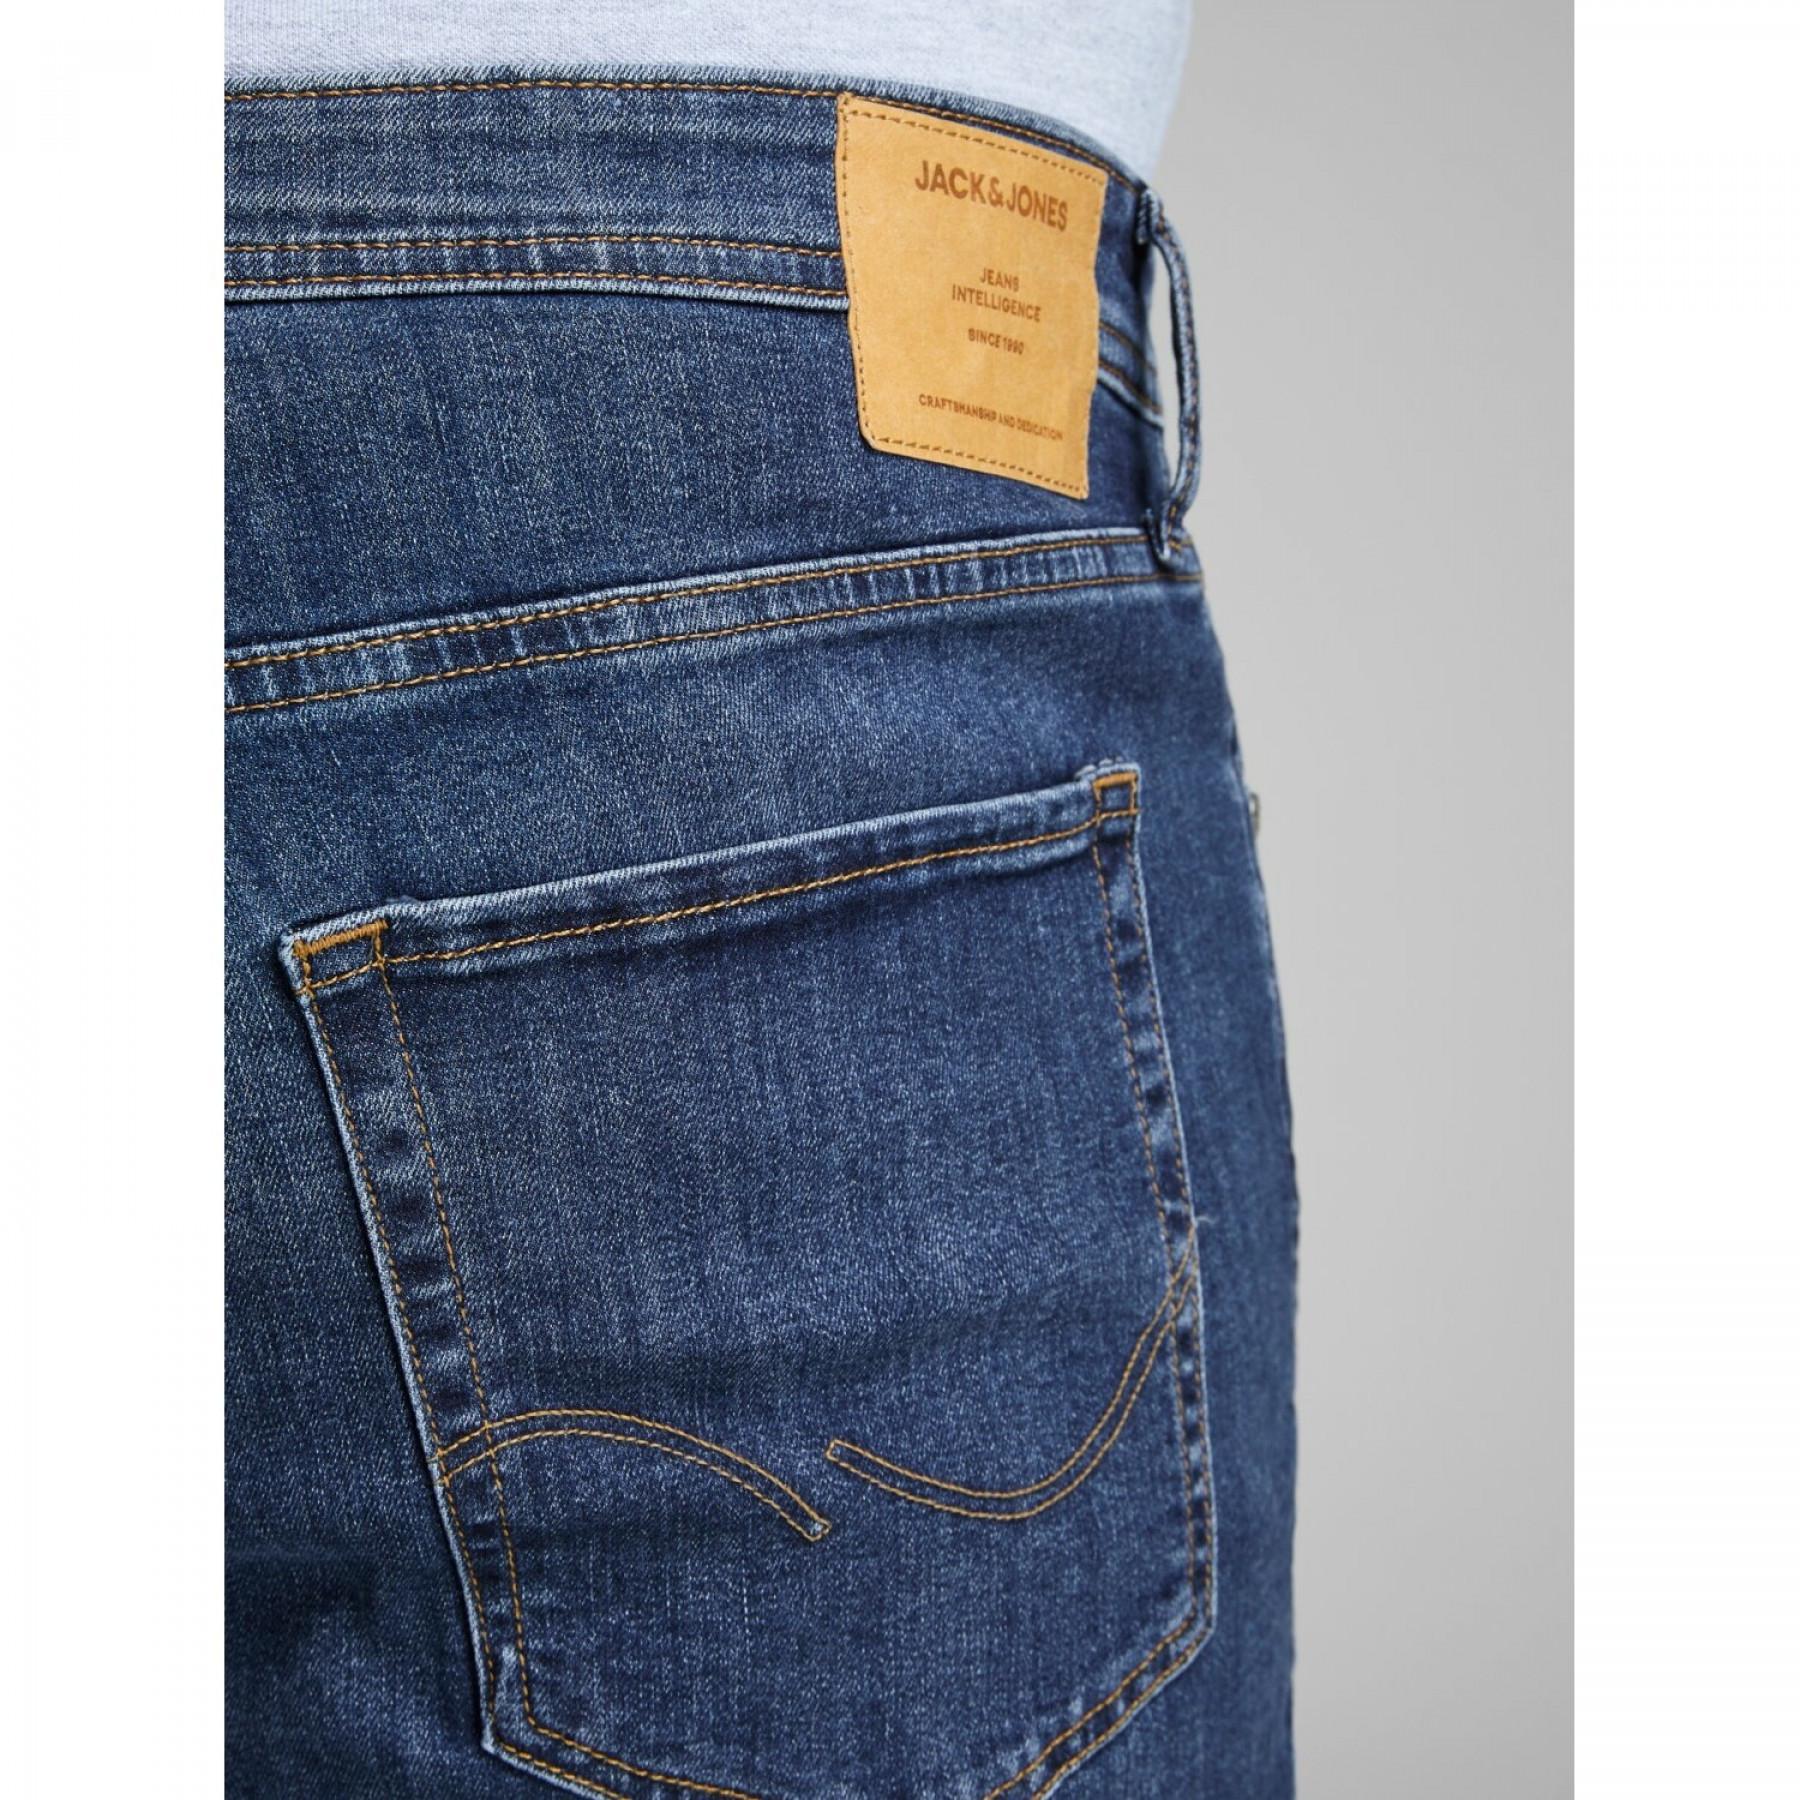 Jeans in großen Größen Jack & Jones Tim Original 814